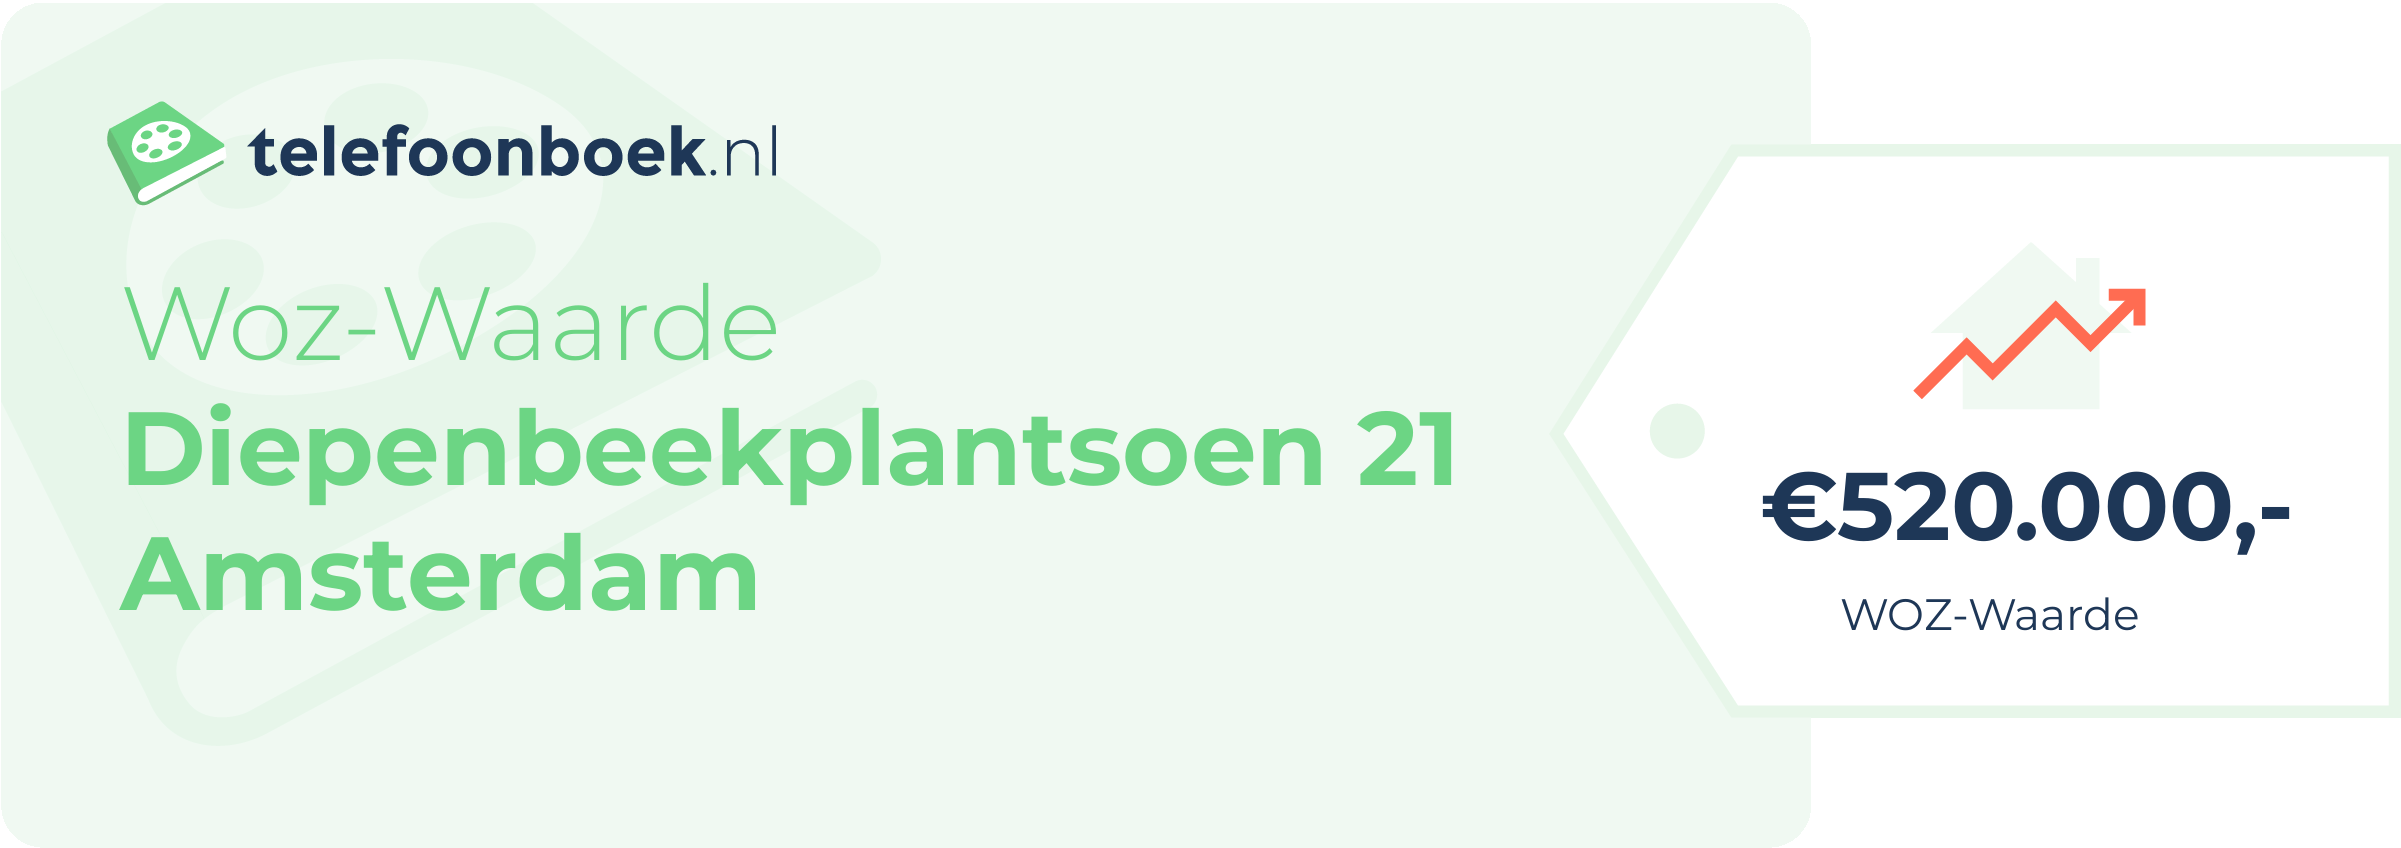 WOZ-waarde Diepenbeekplantsoen 21 Amsterdam